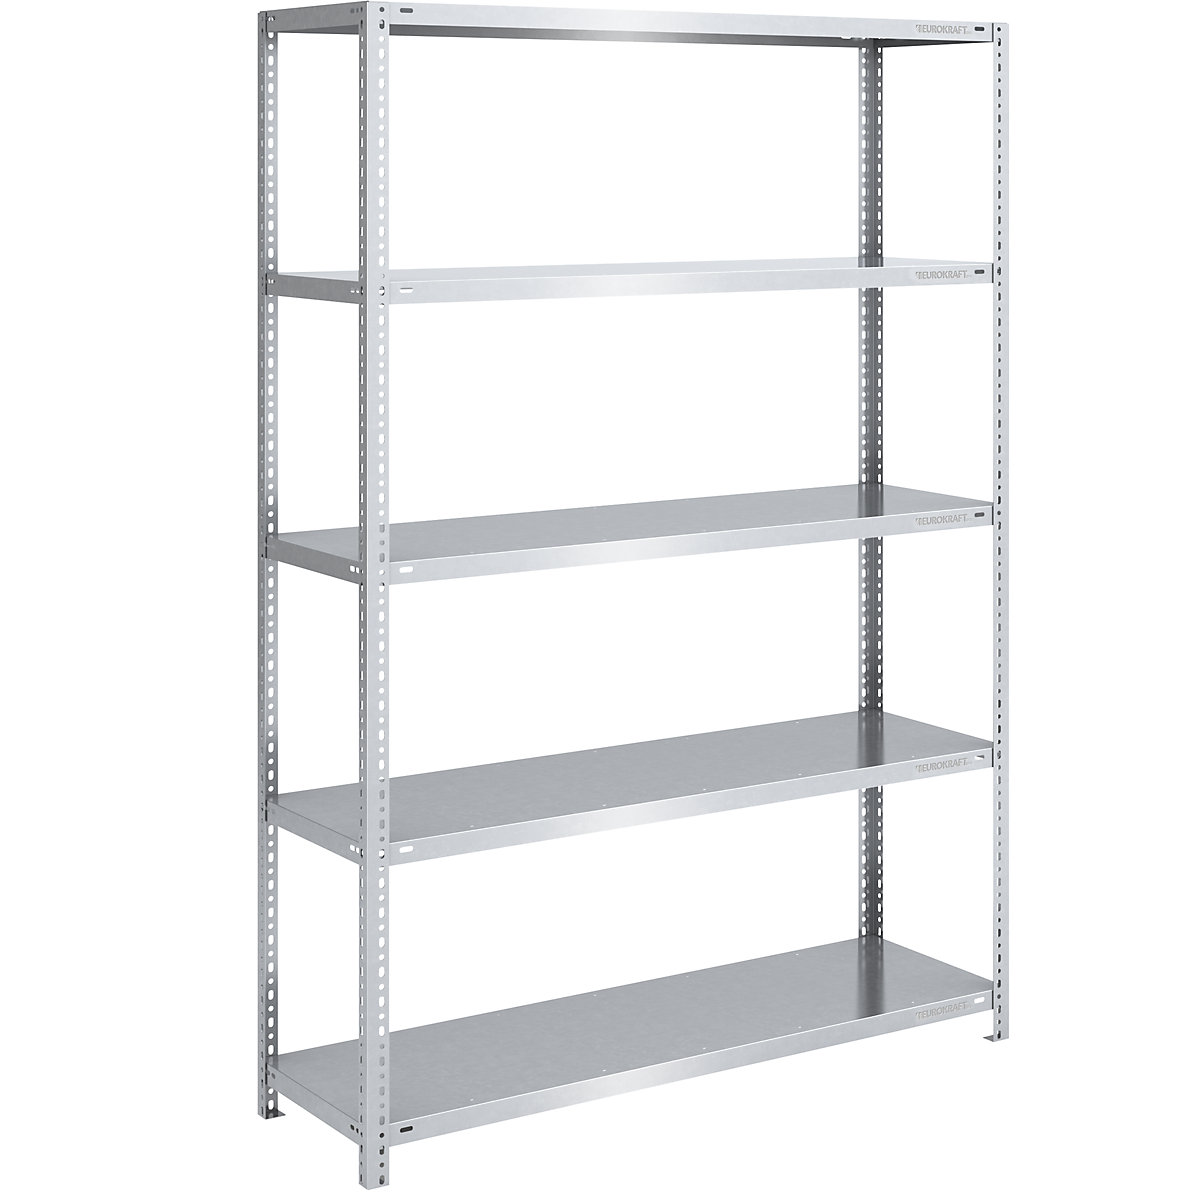 Bolt-together storage shelving, zinc plated, medium duty – eurokraft pro, shelf unit height 2000 mm, shelf width 1300 mm, depth 500 mm, standard shelf unit-12